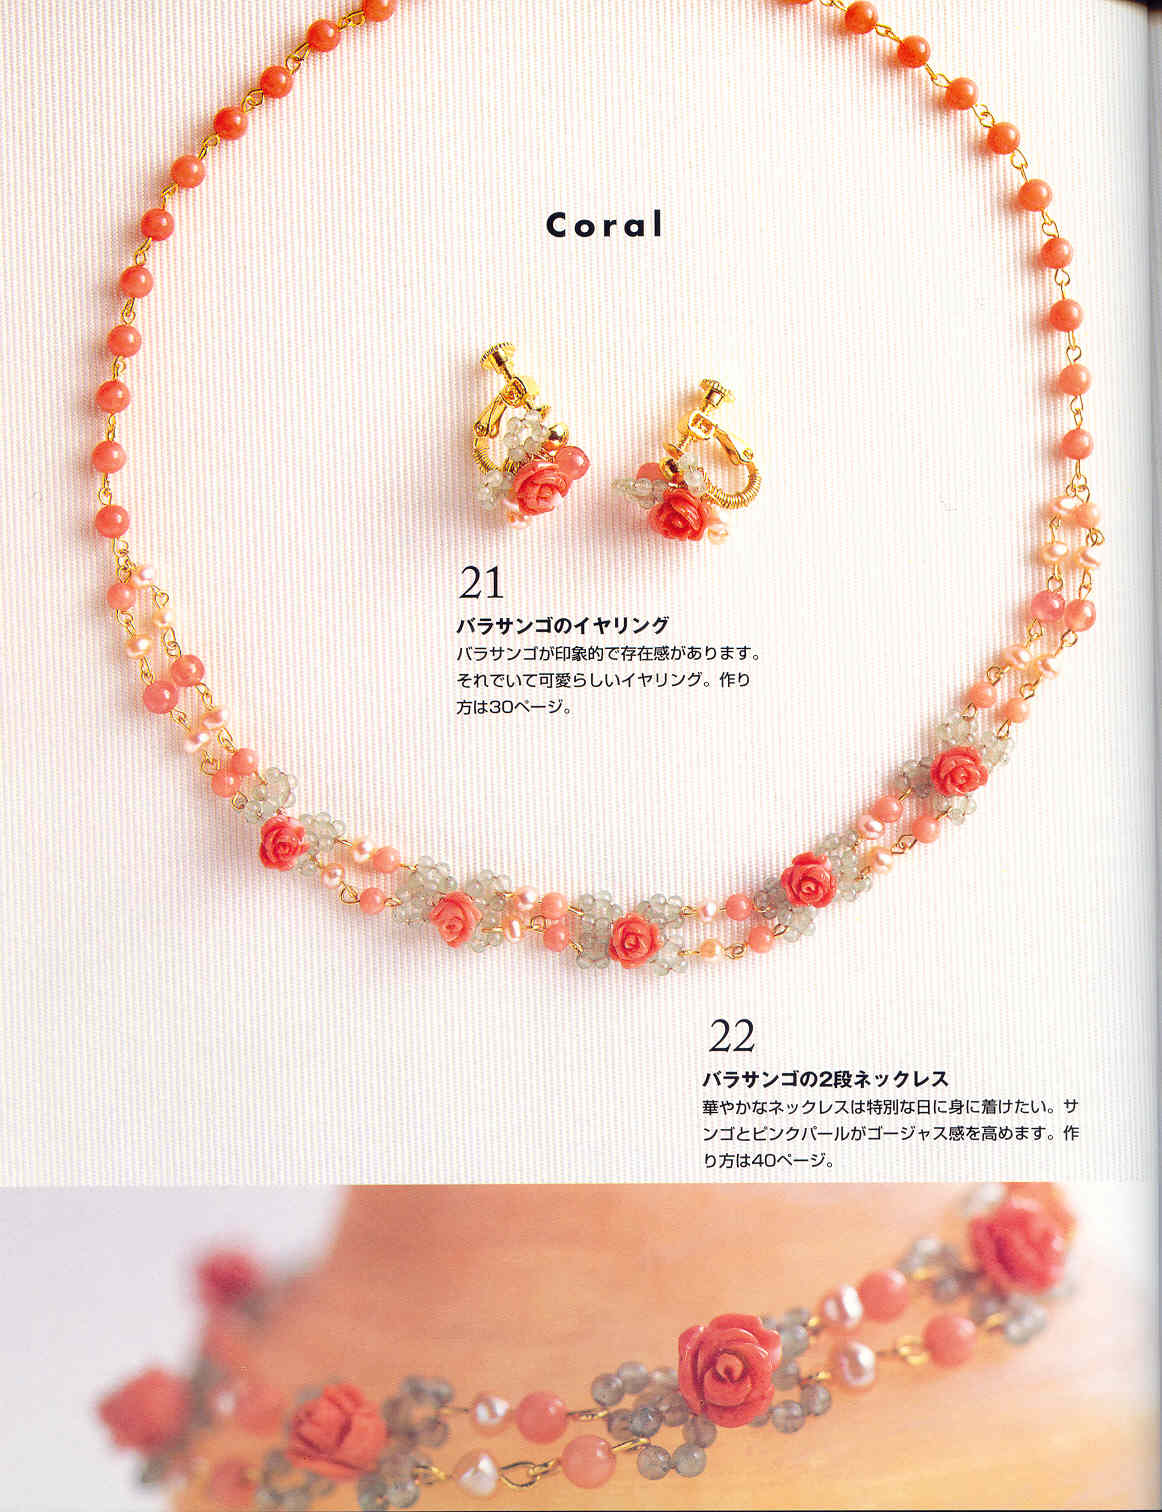 Romantic bead jewelry - 304555924802607387.jpg